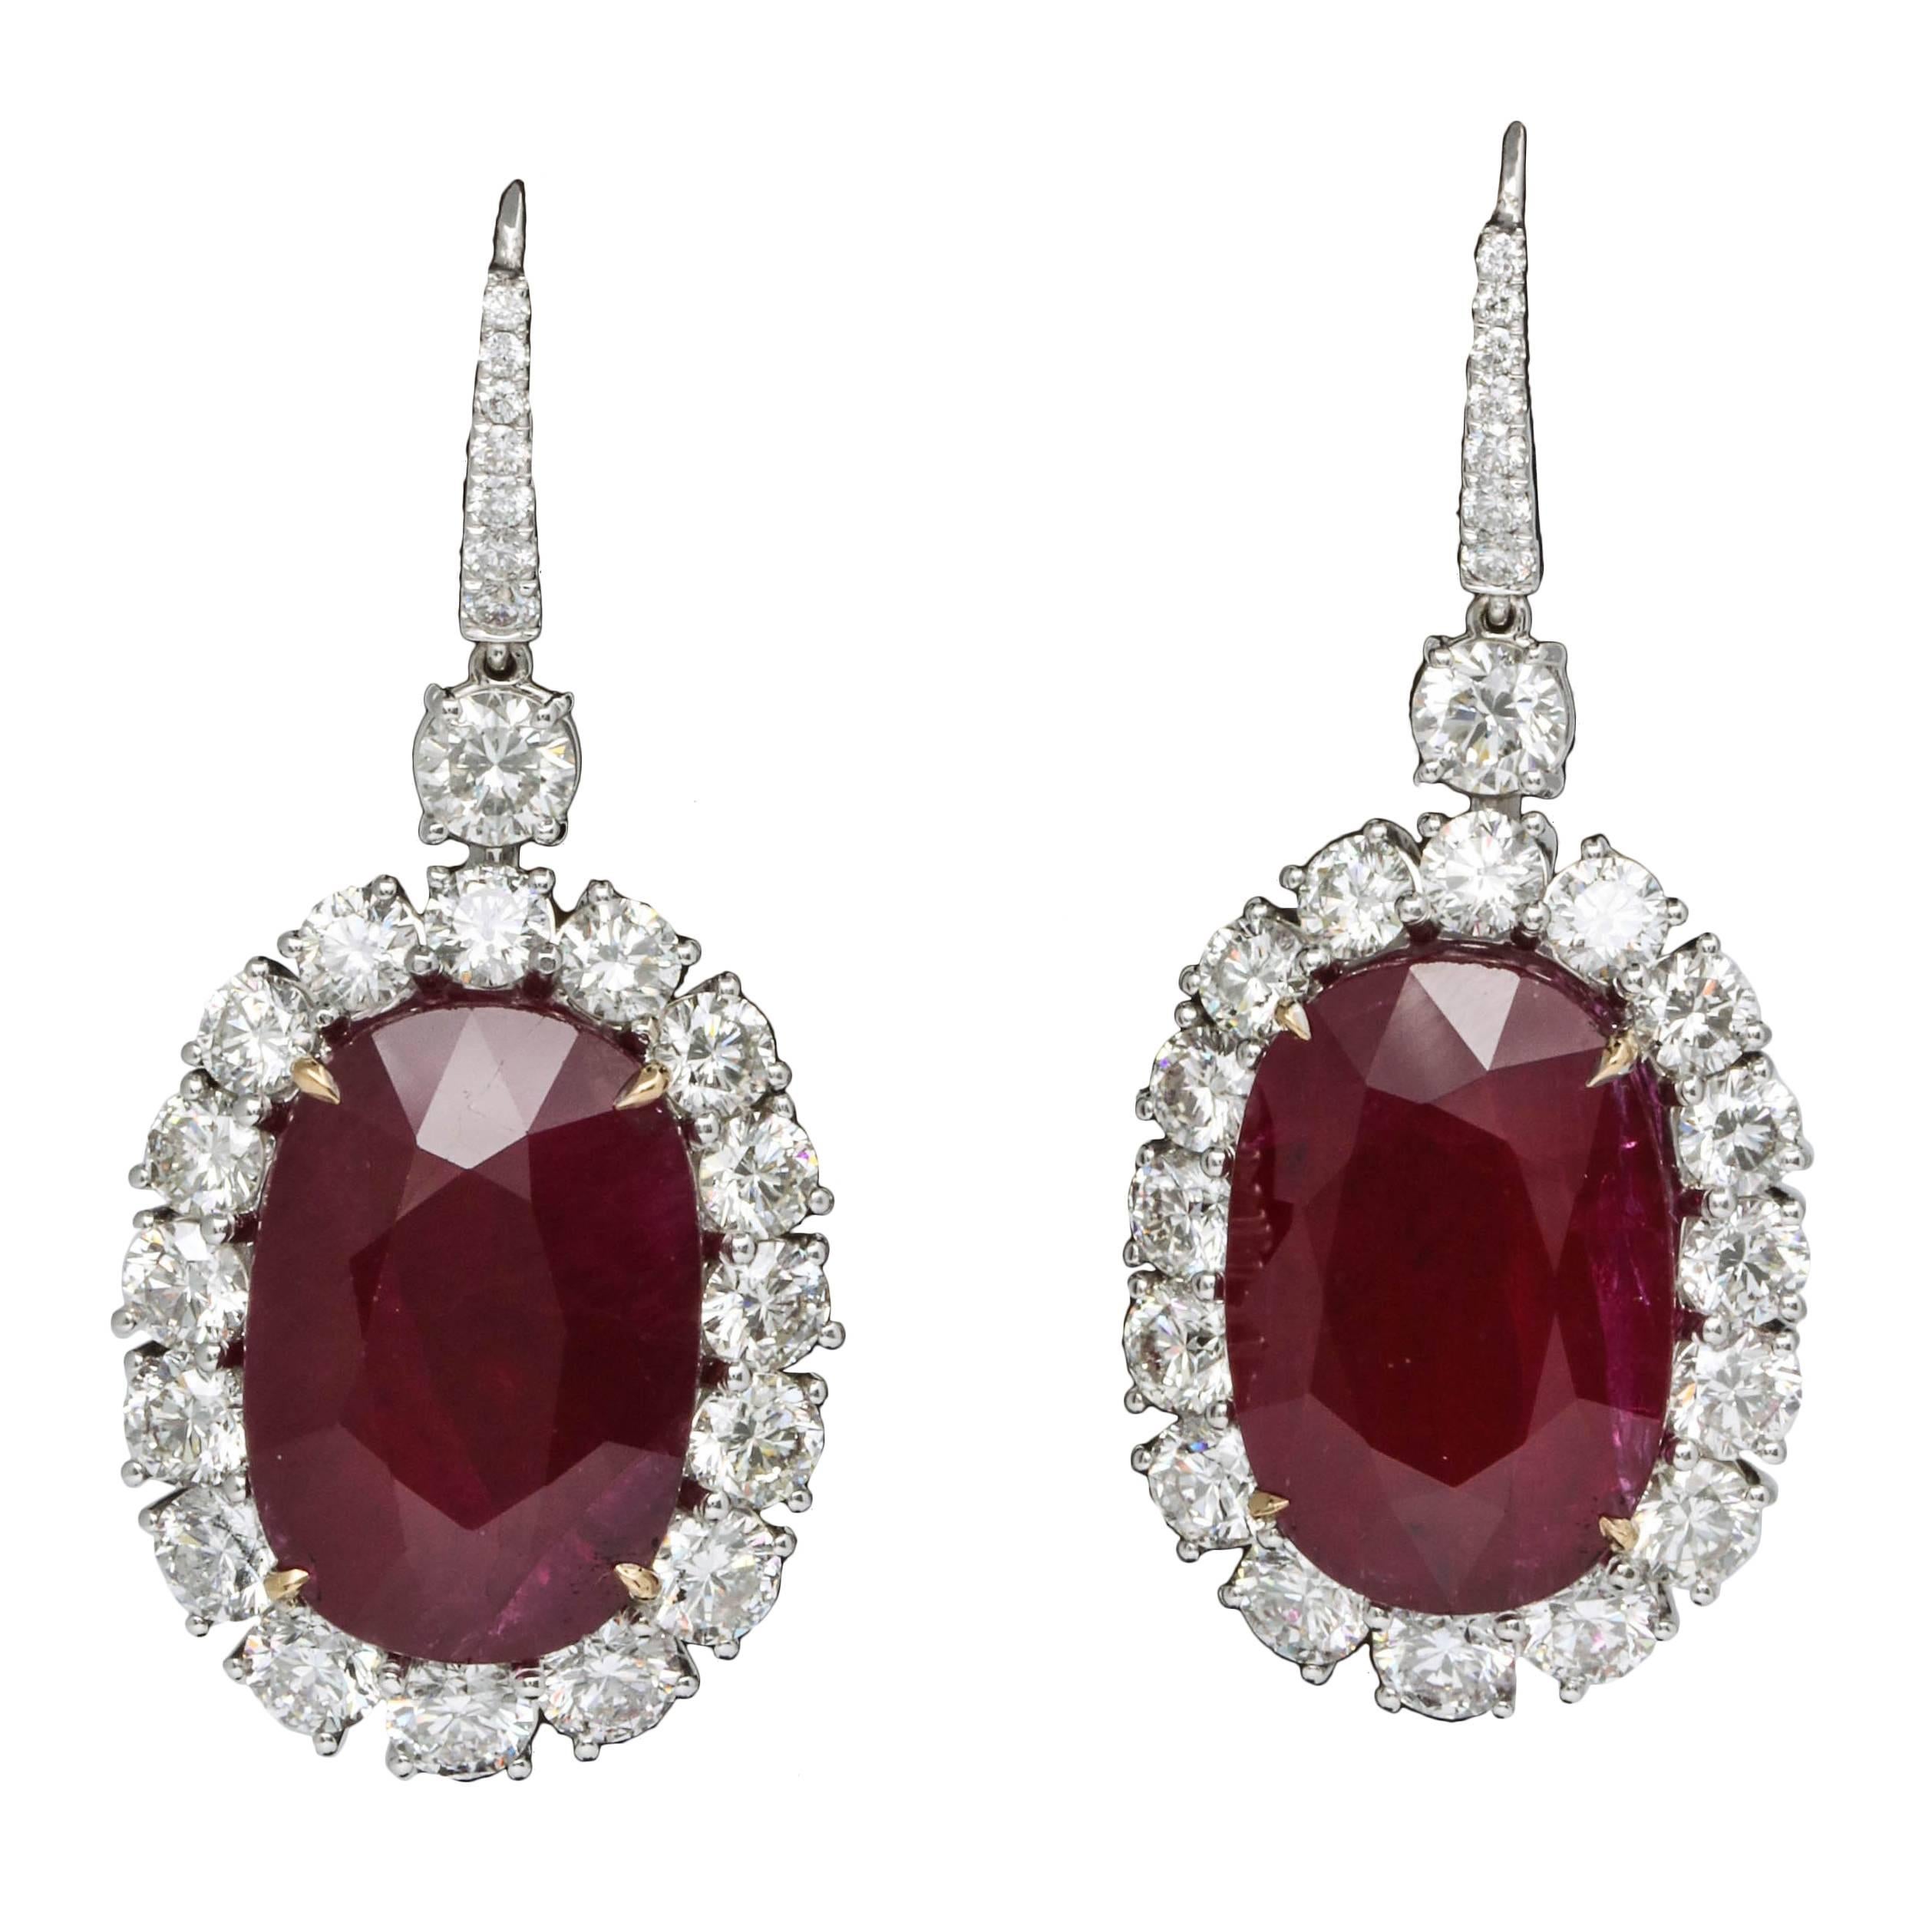 33 Carat GIA Certified Ruby and Diamond Earrings